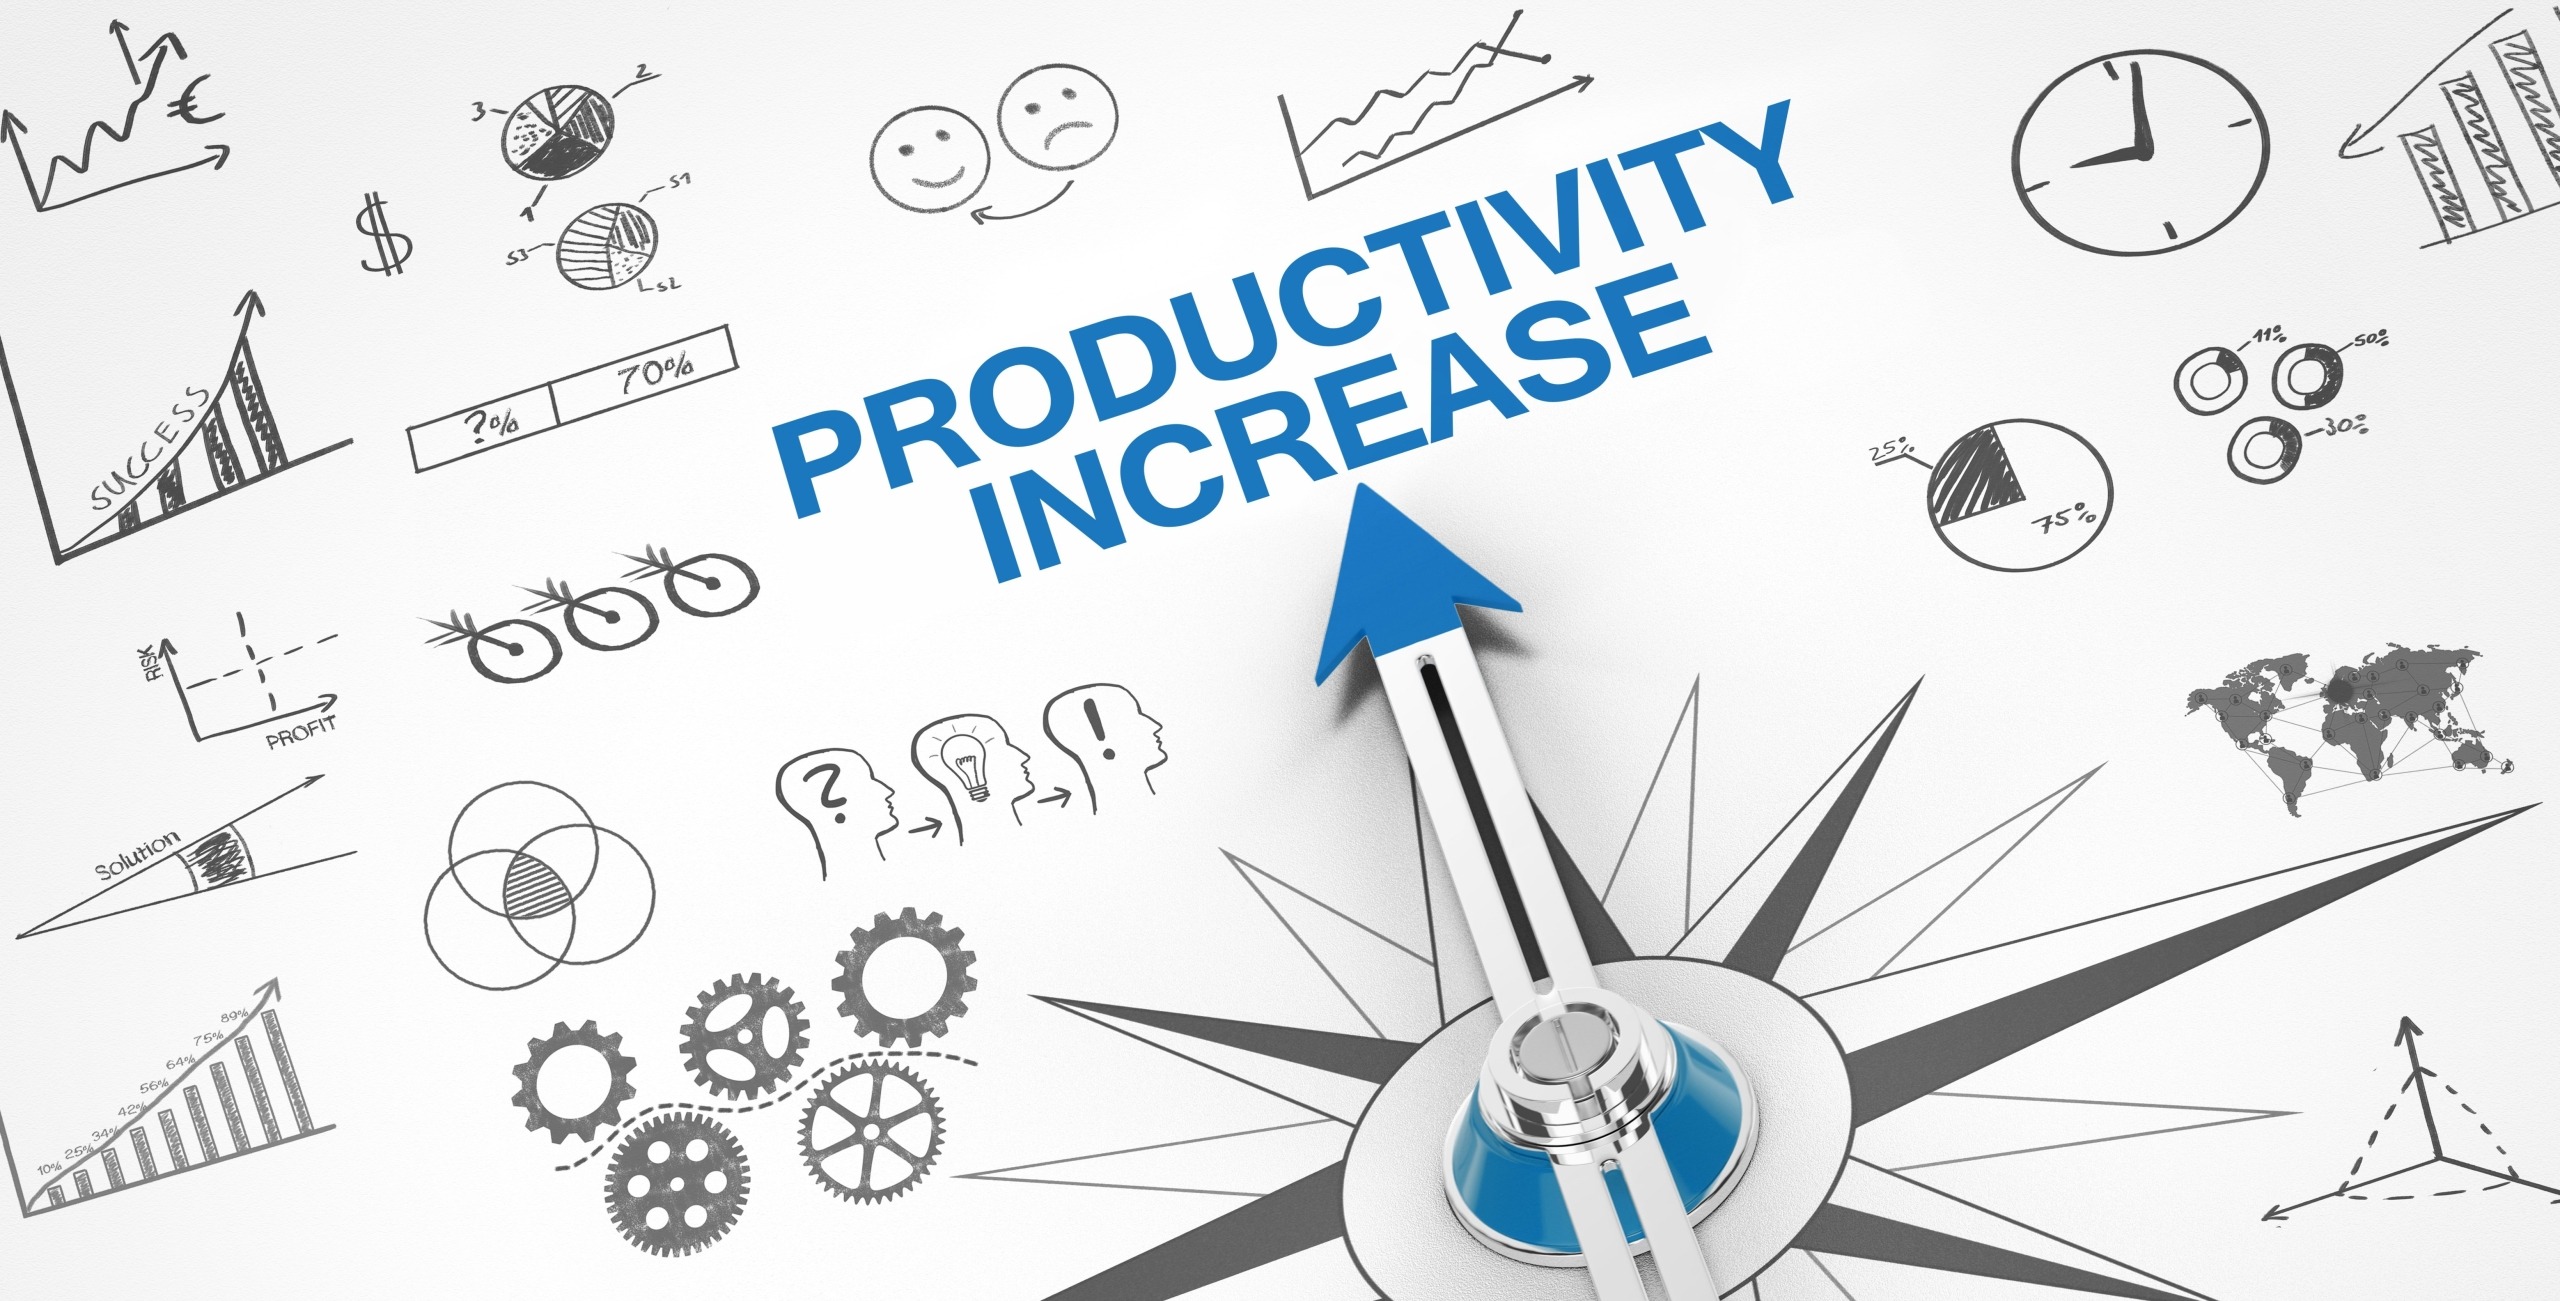 productivity increase image